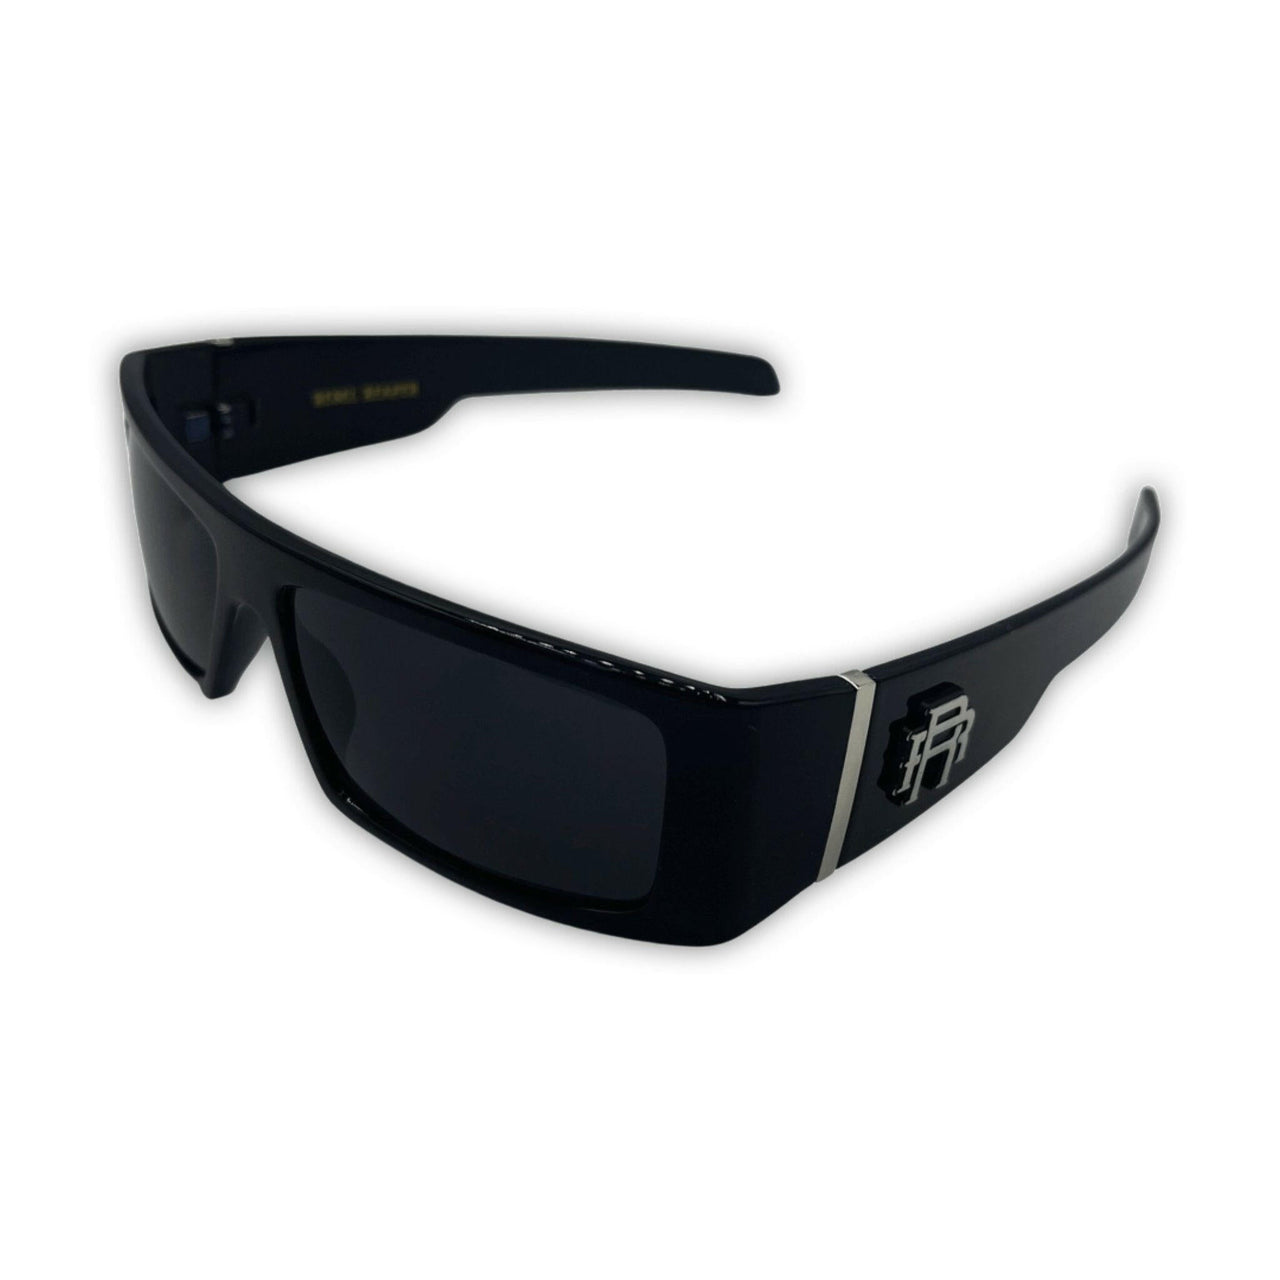 Slick Black Sunglasses - Rebel Reaper Clothing Companysunglasses